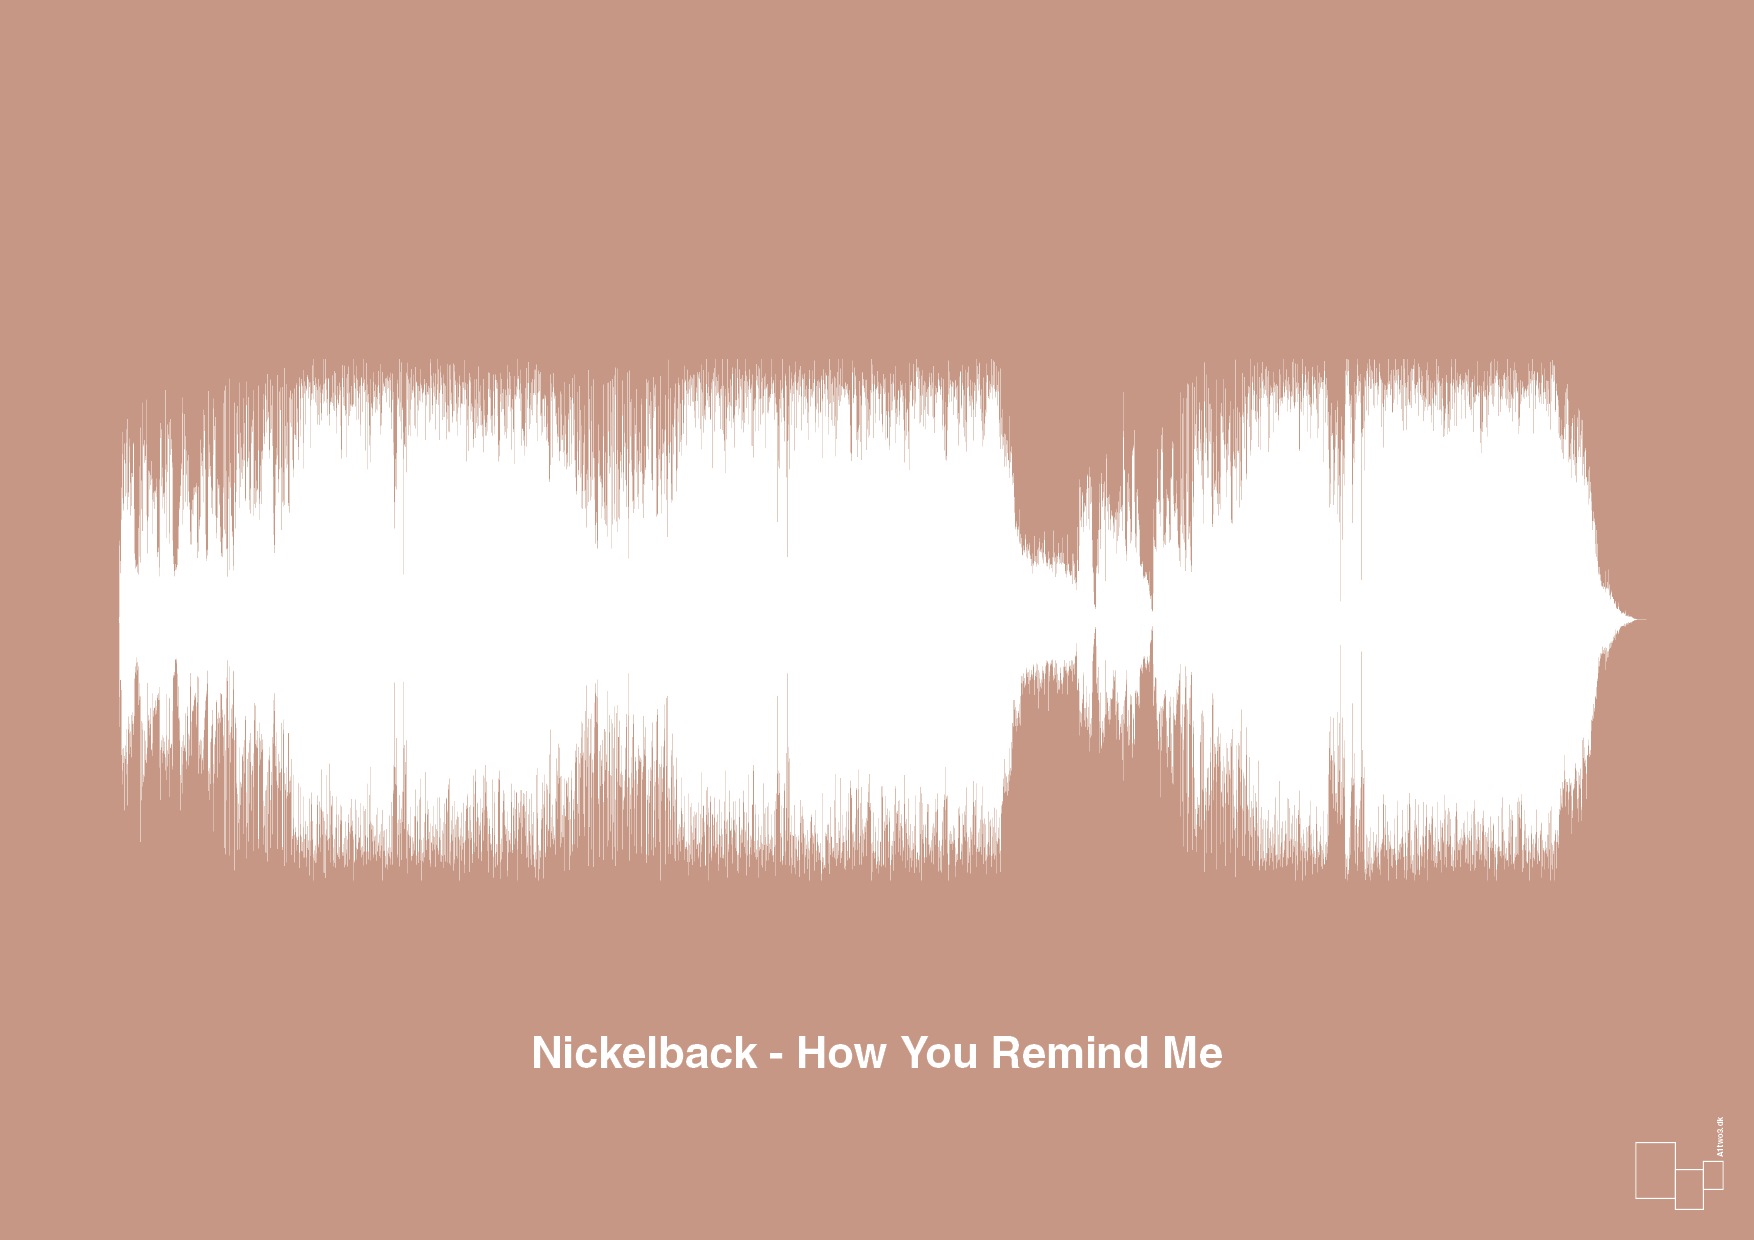 nickelback - how you remind me - Plakat med Musik i Powder